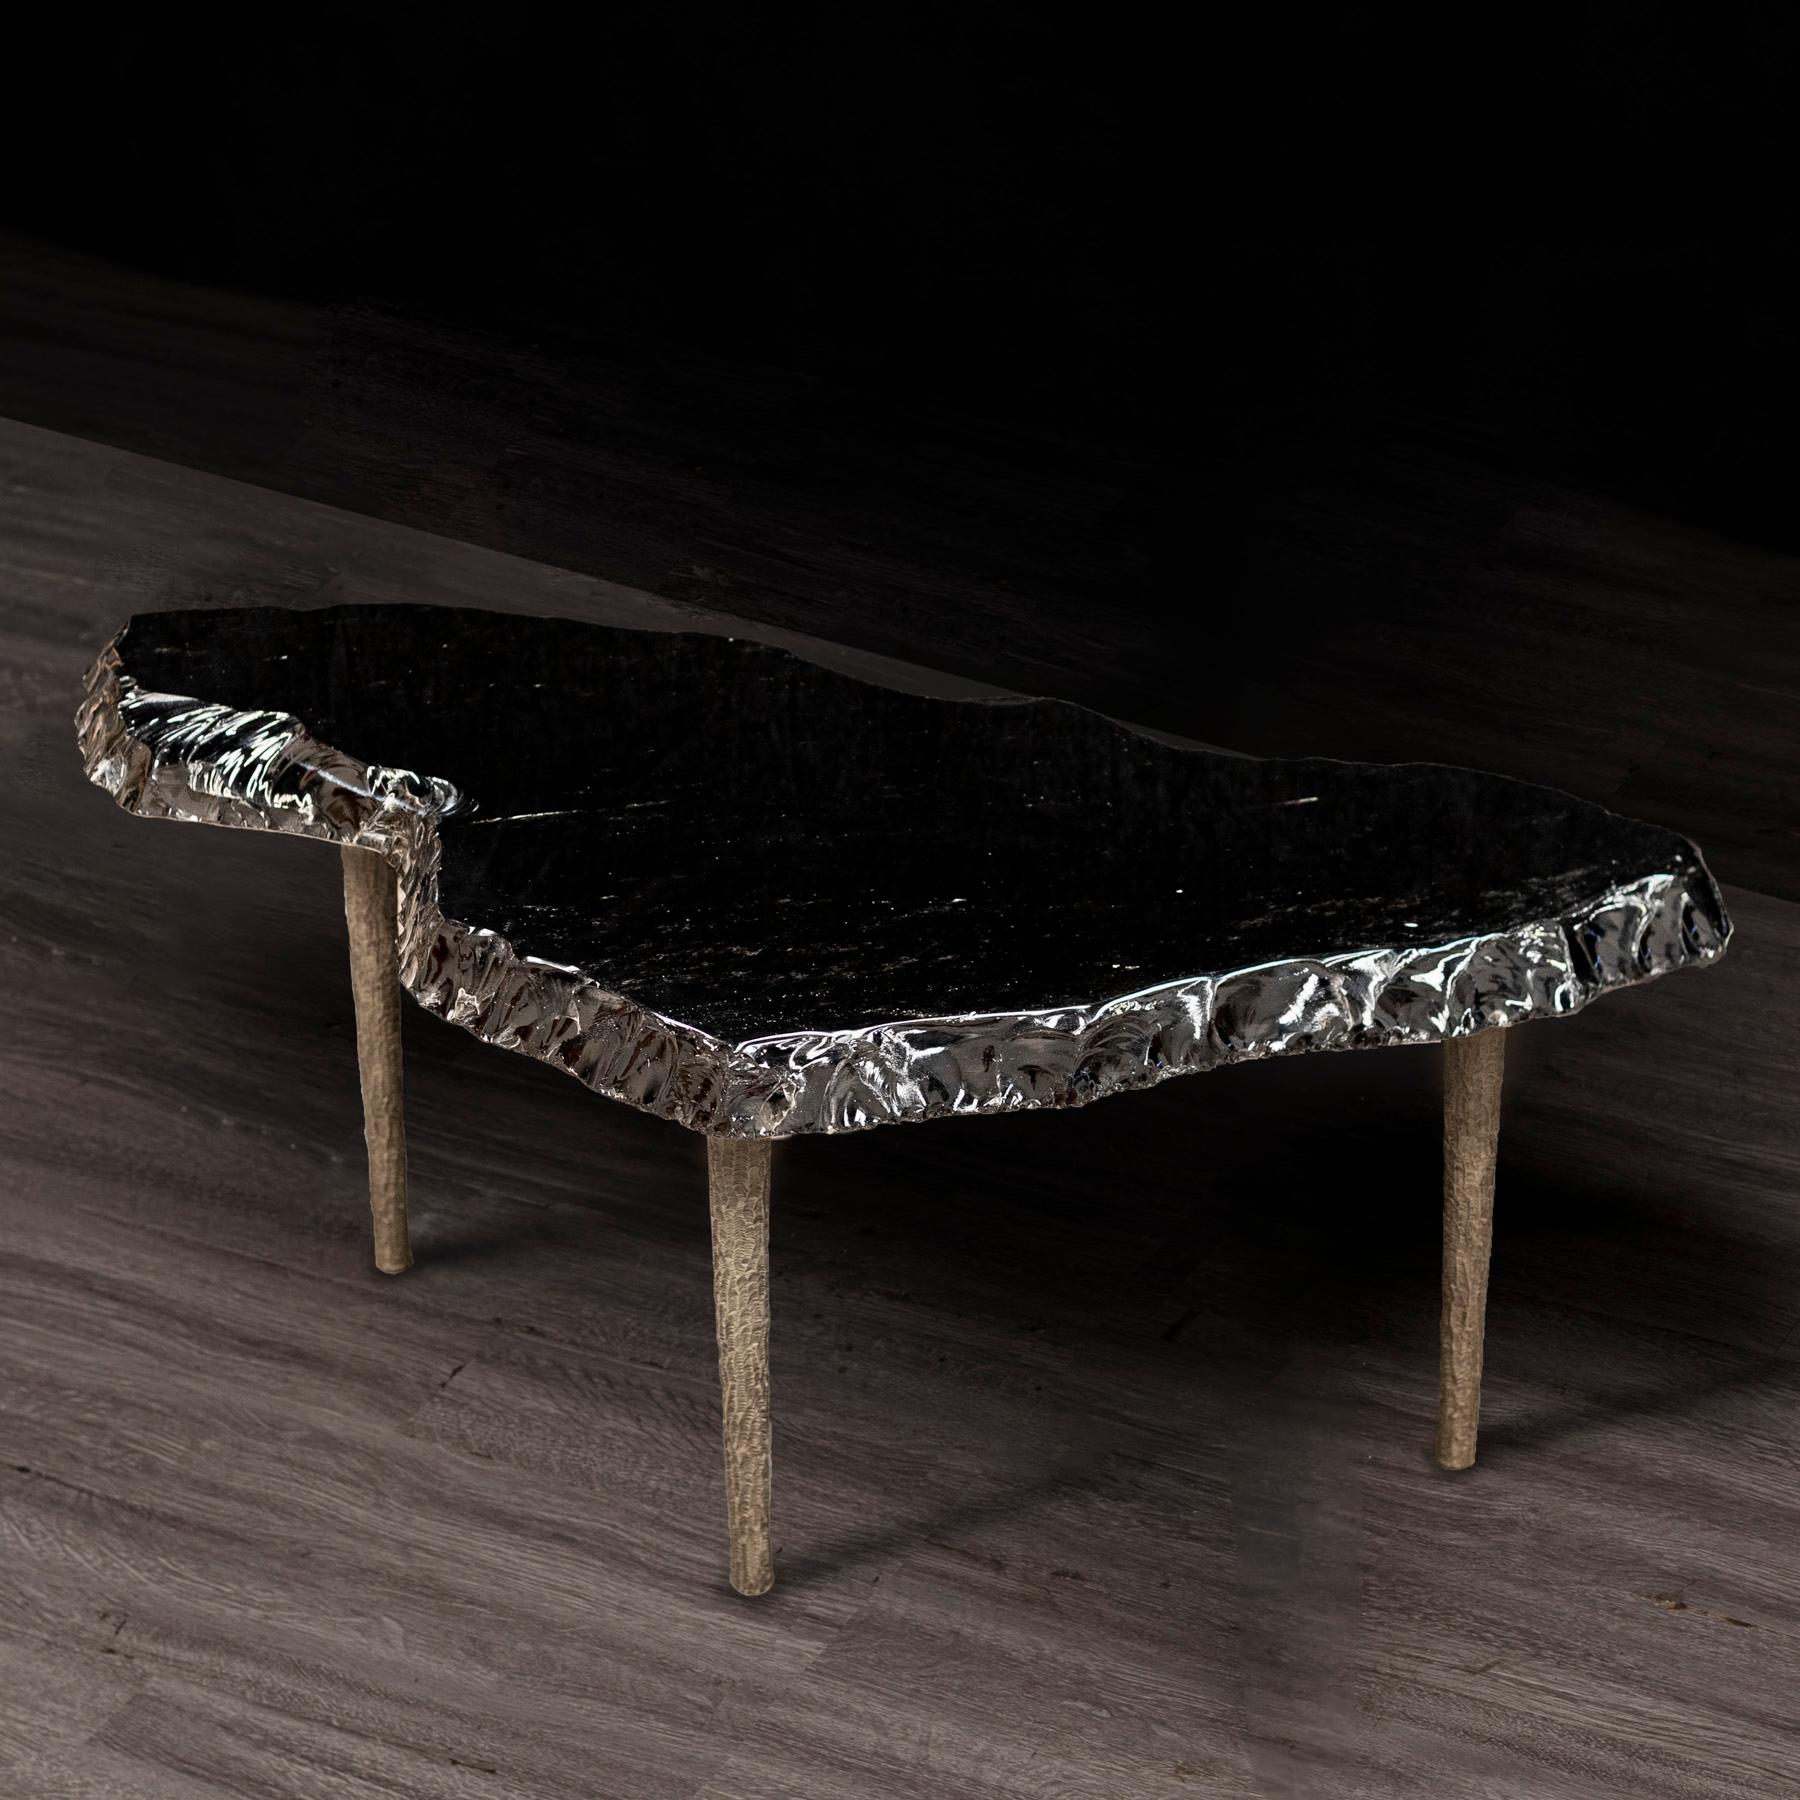 obsidian table top